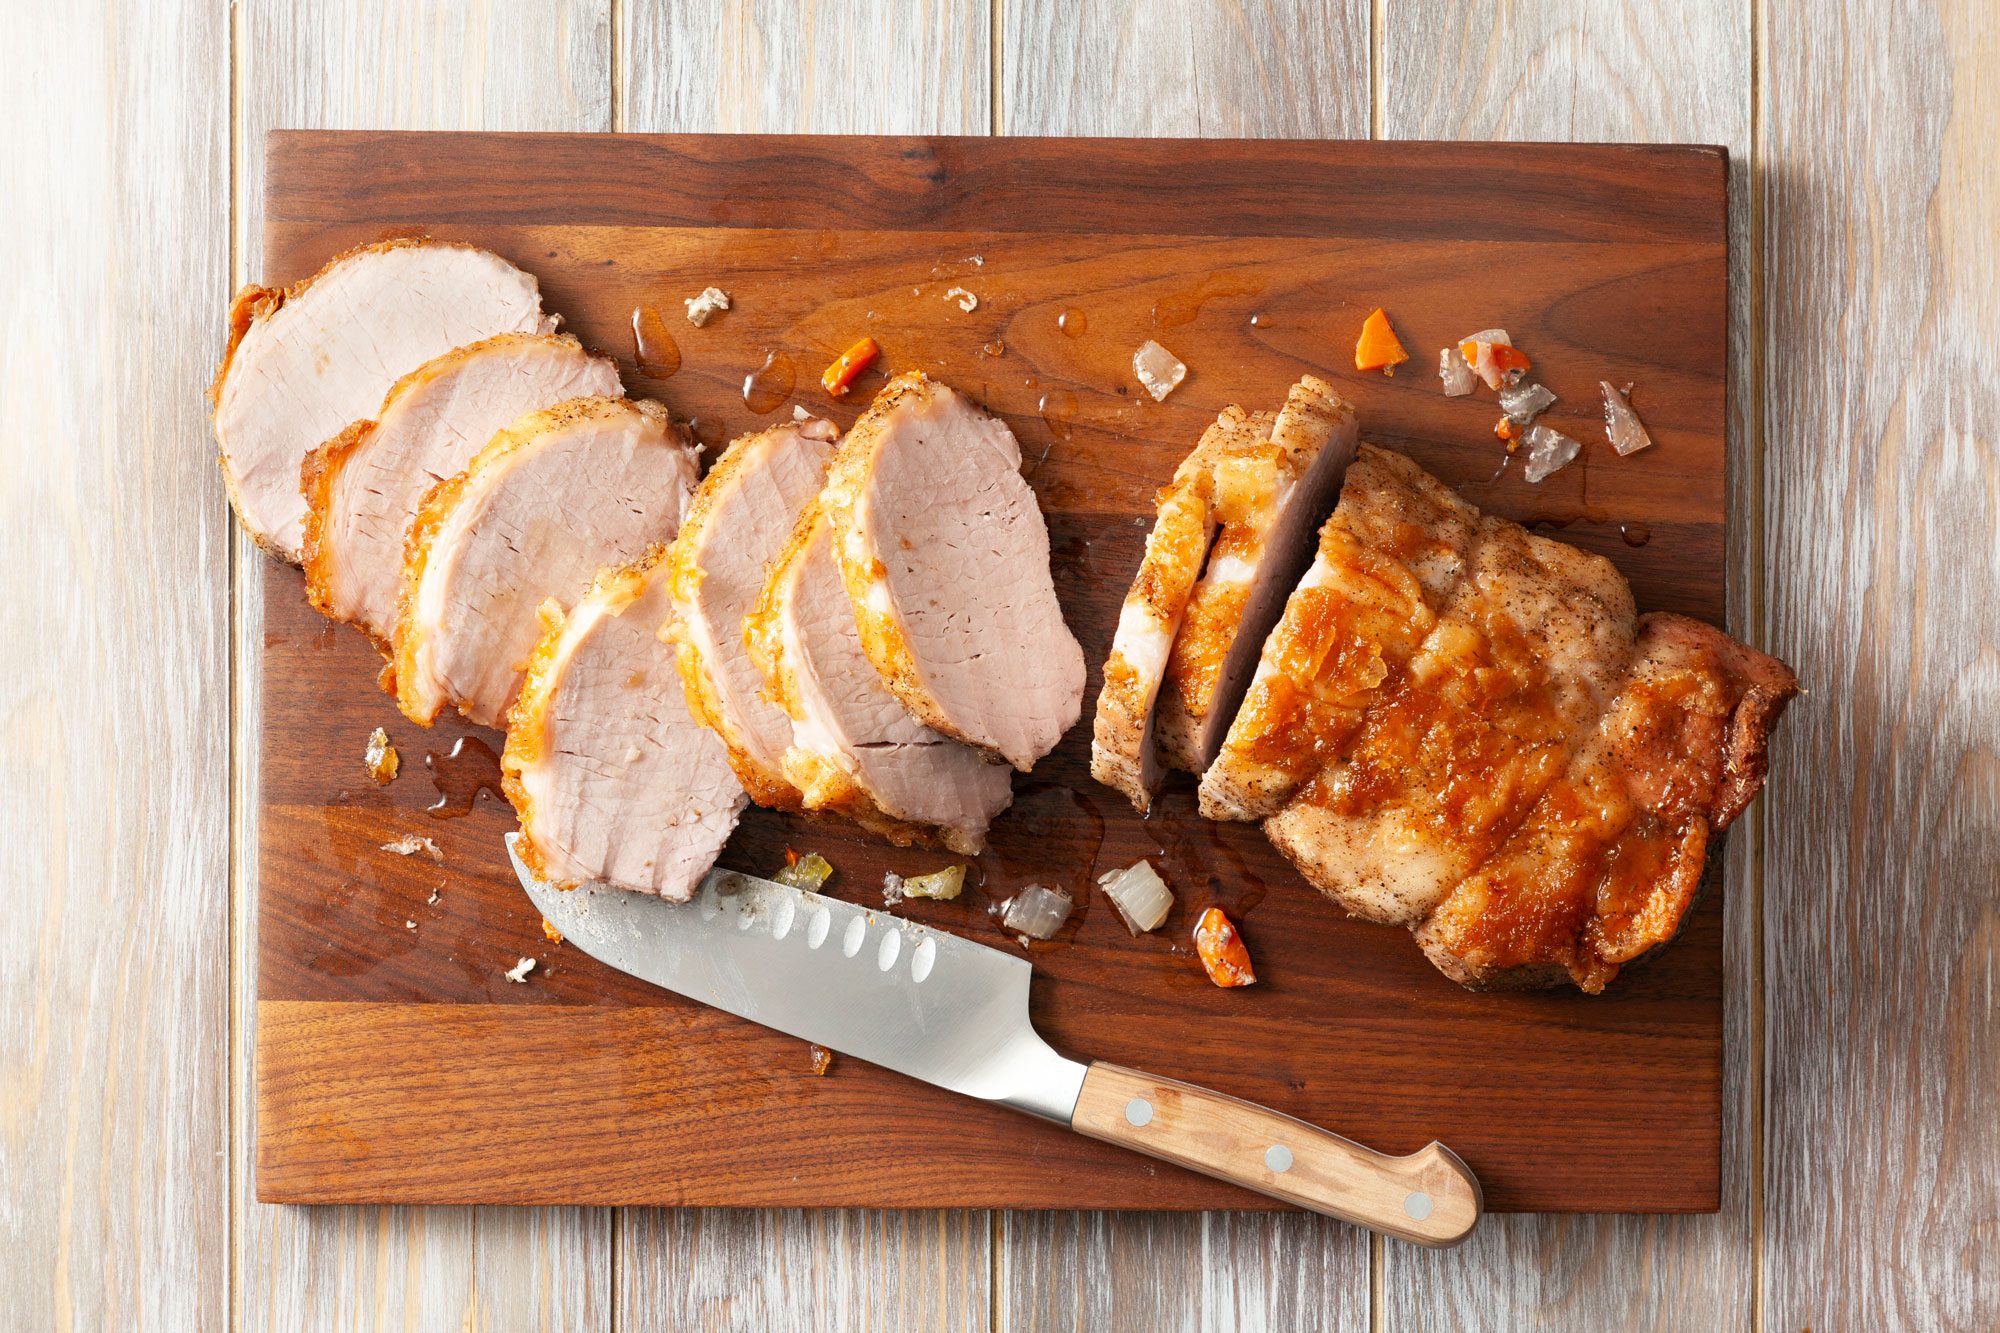 Sliced pork roast on cutting board with knife